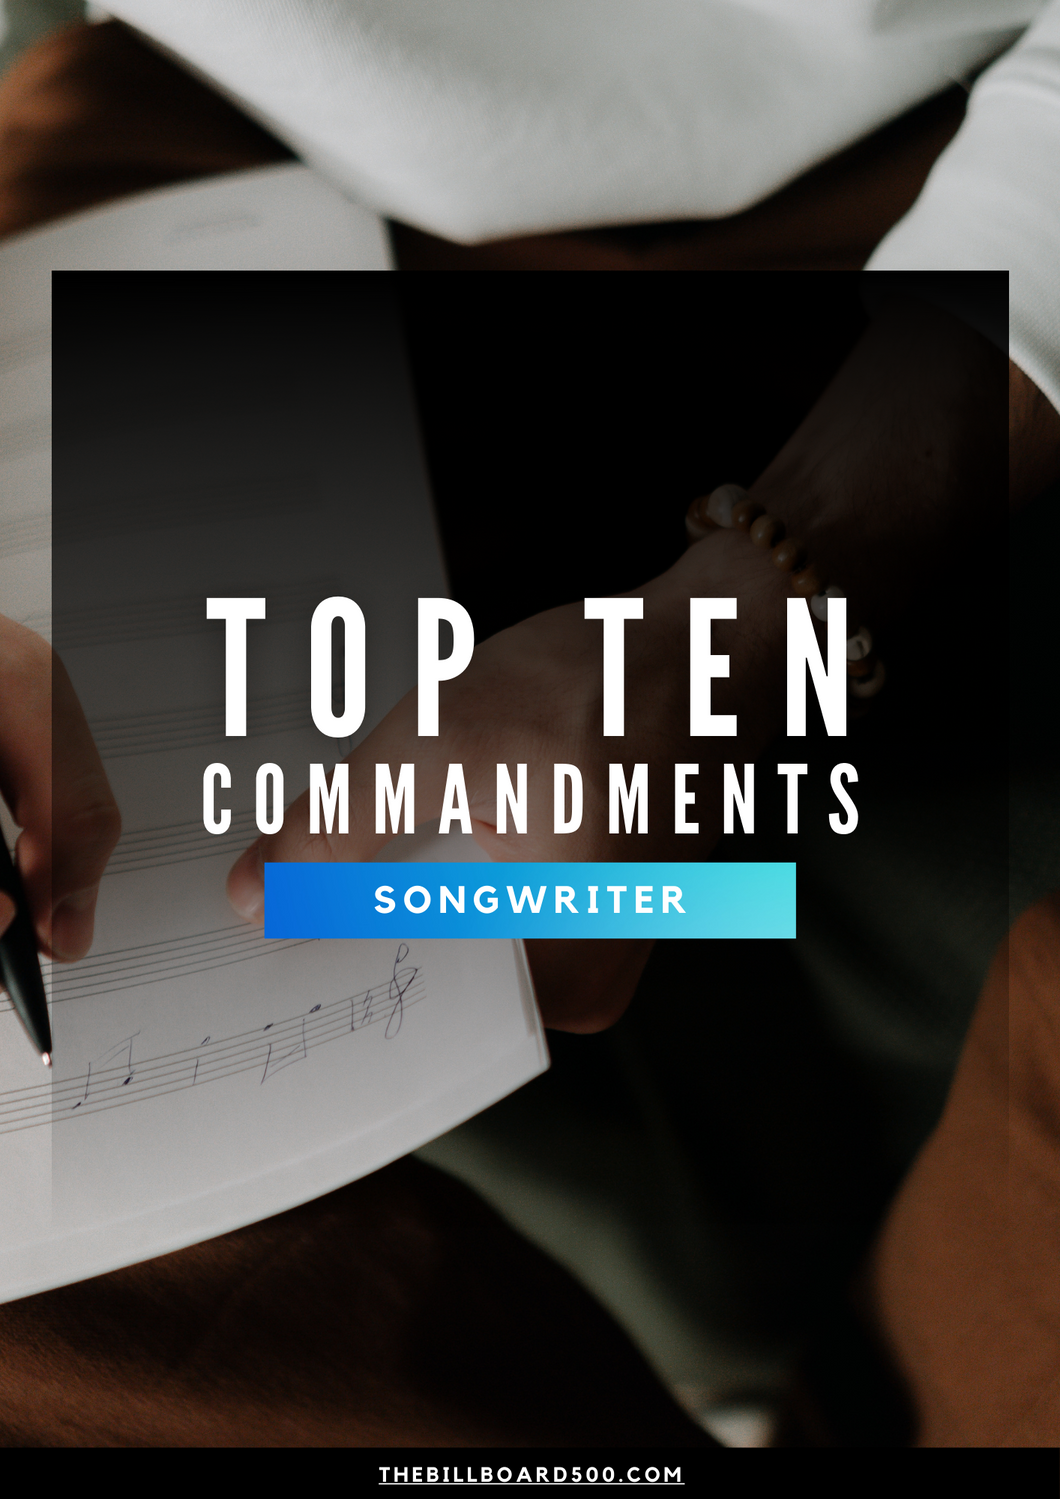 Songwriter Top Ten Commandments - The Billboard 500 Club